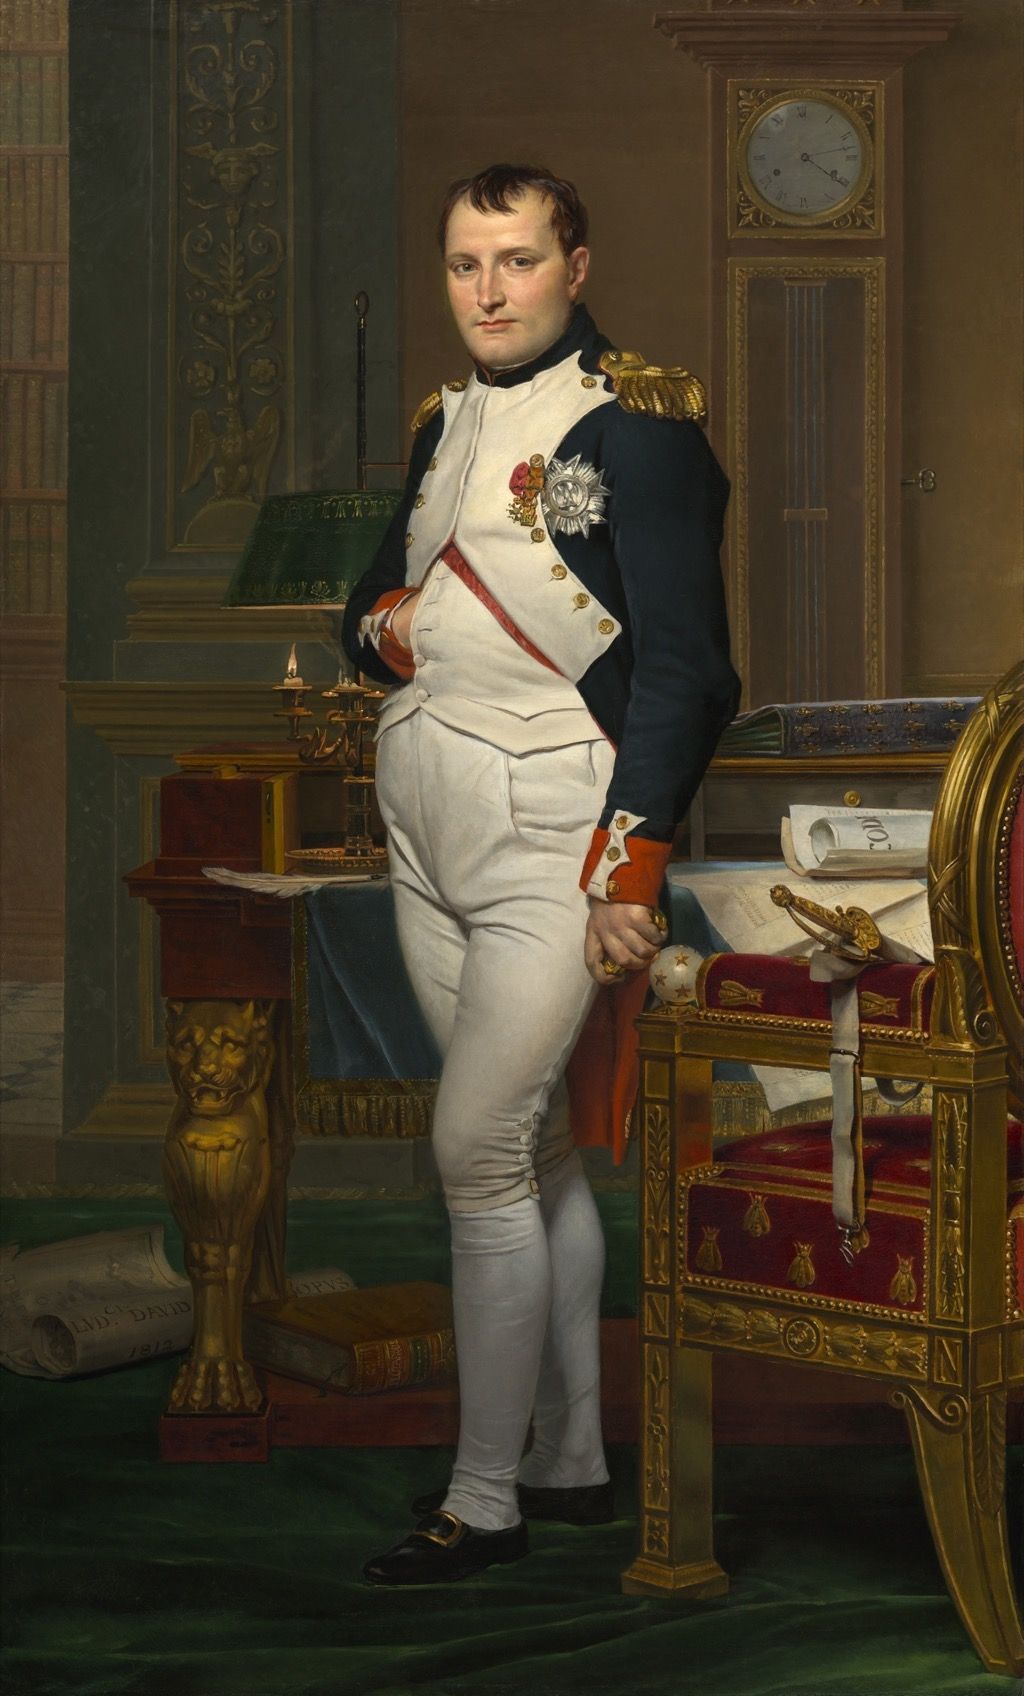 Napoléon insulte les politiciens